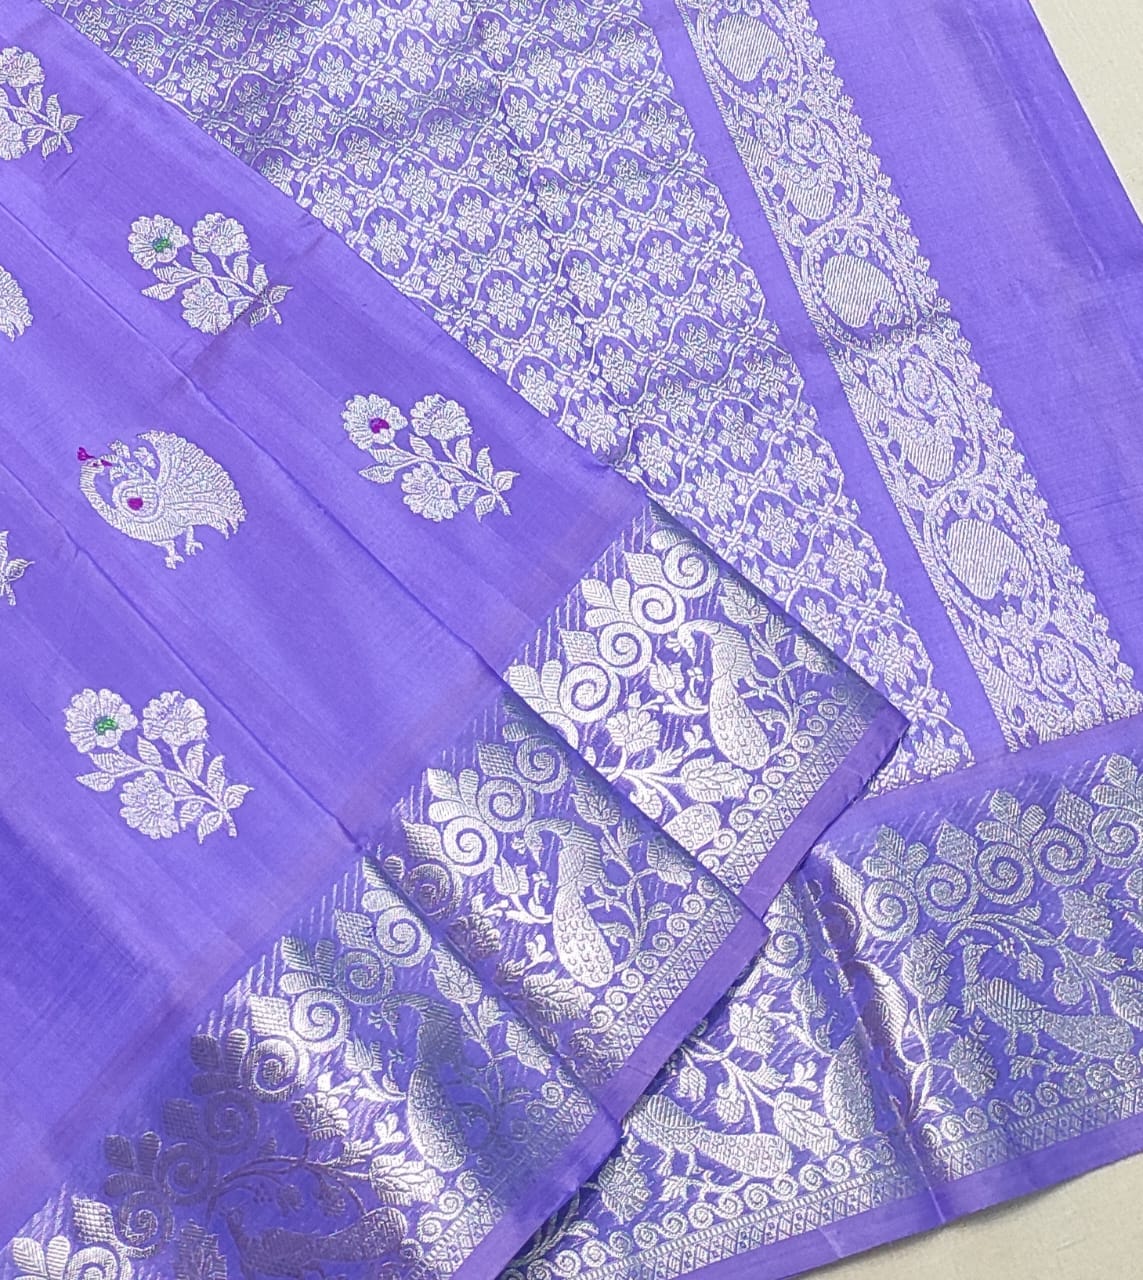 Lavender self venkatagiri pure silk saree